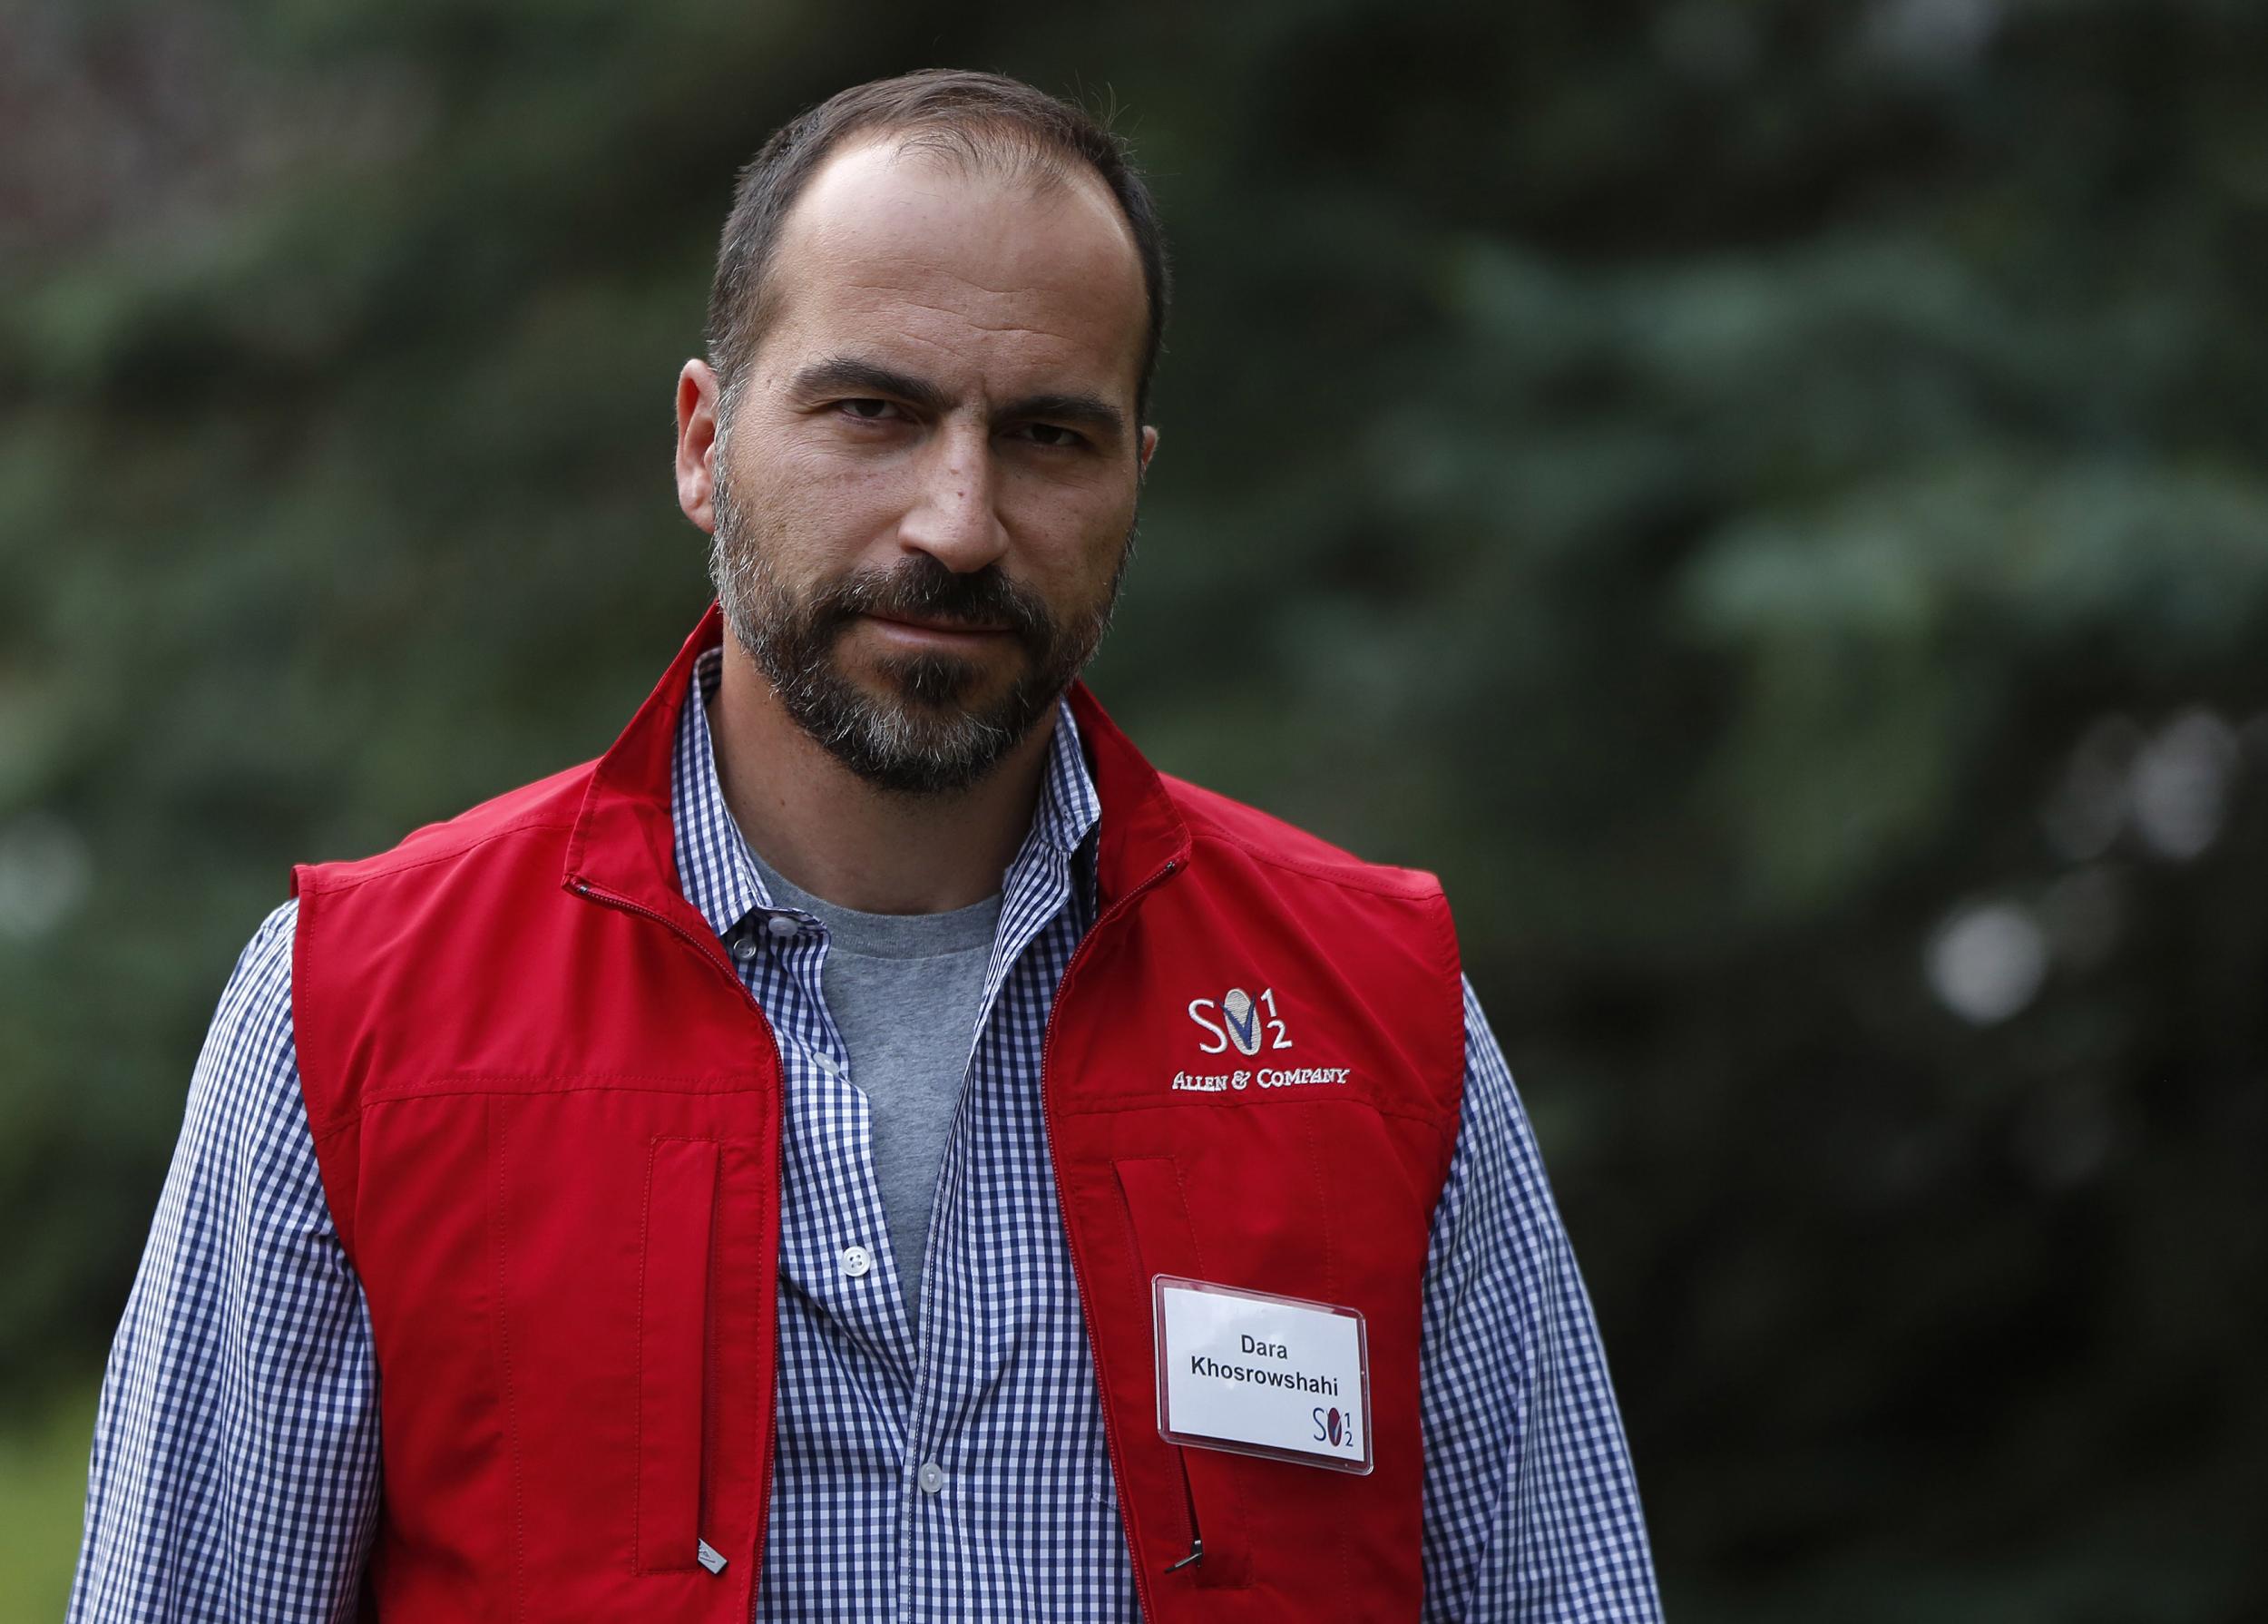 Chief executive Dara Khosrowshahi is firefighting Uber’s biggest crisis to date